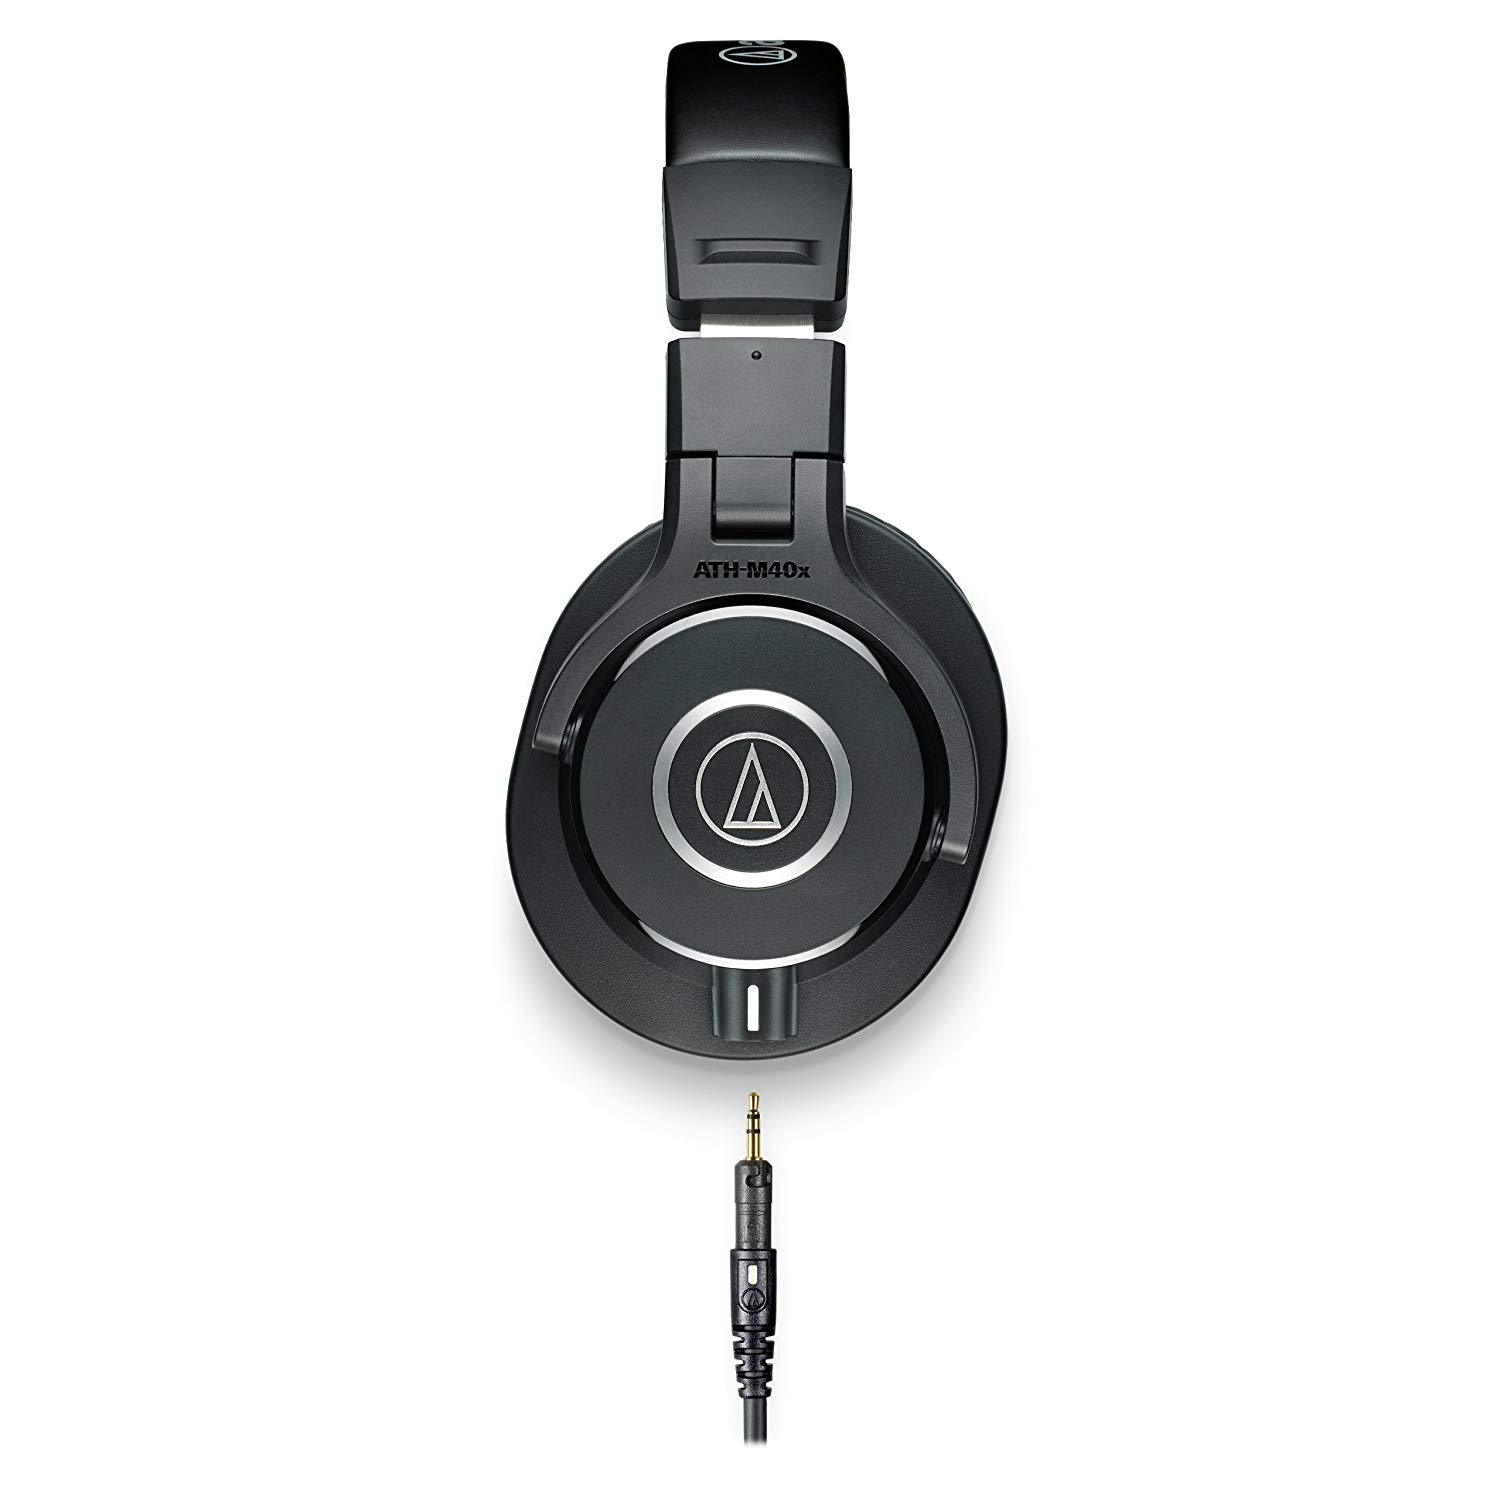 Audio-Technica ATH-M40x Professional Studio Monitor Headphone